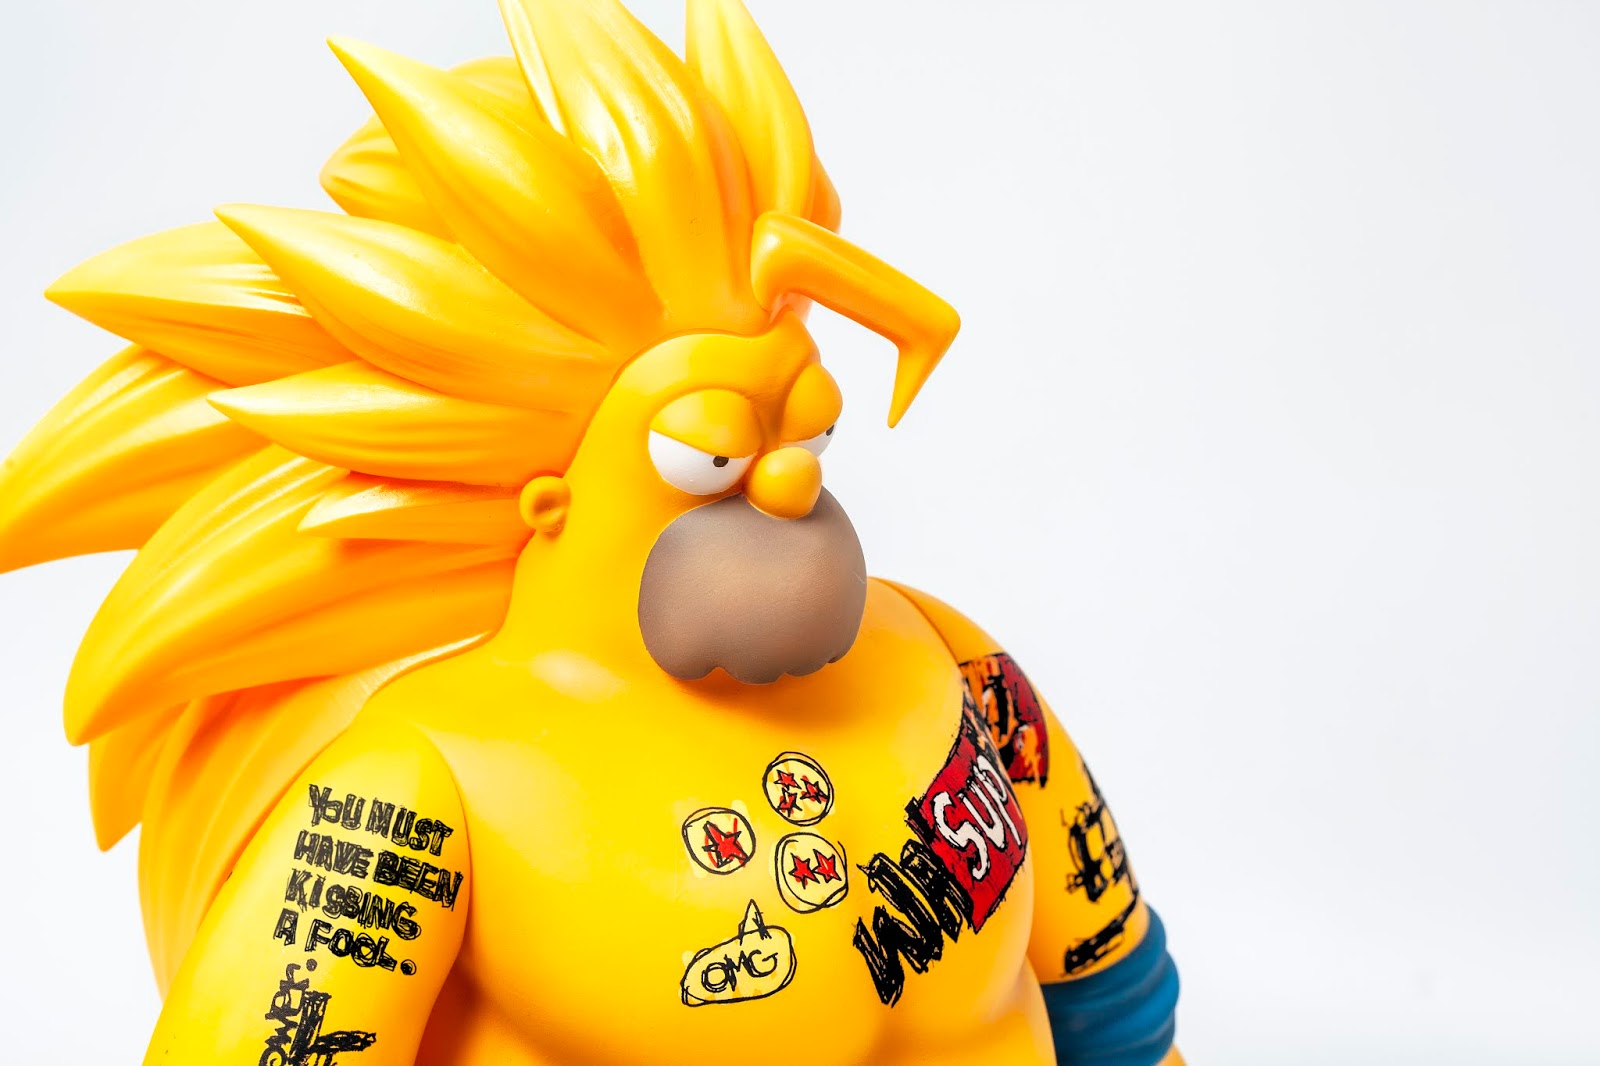 Dokken Awaken Art Toy Figure by Fools Paradise